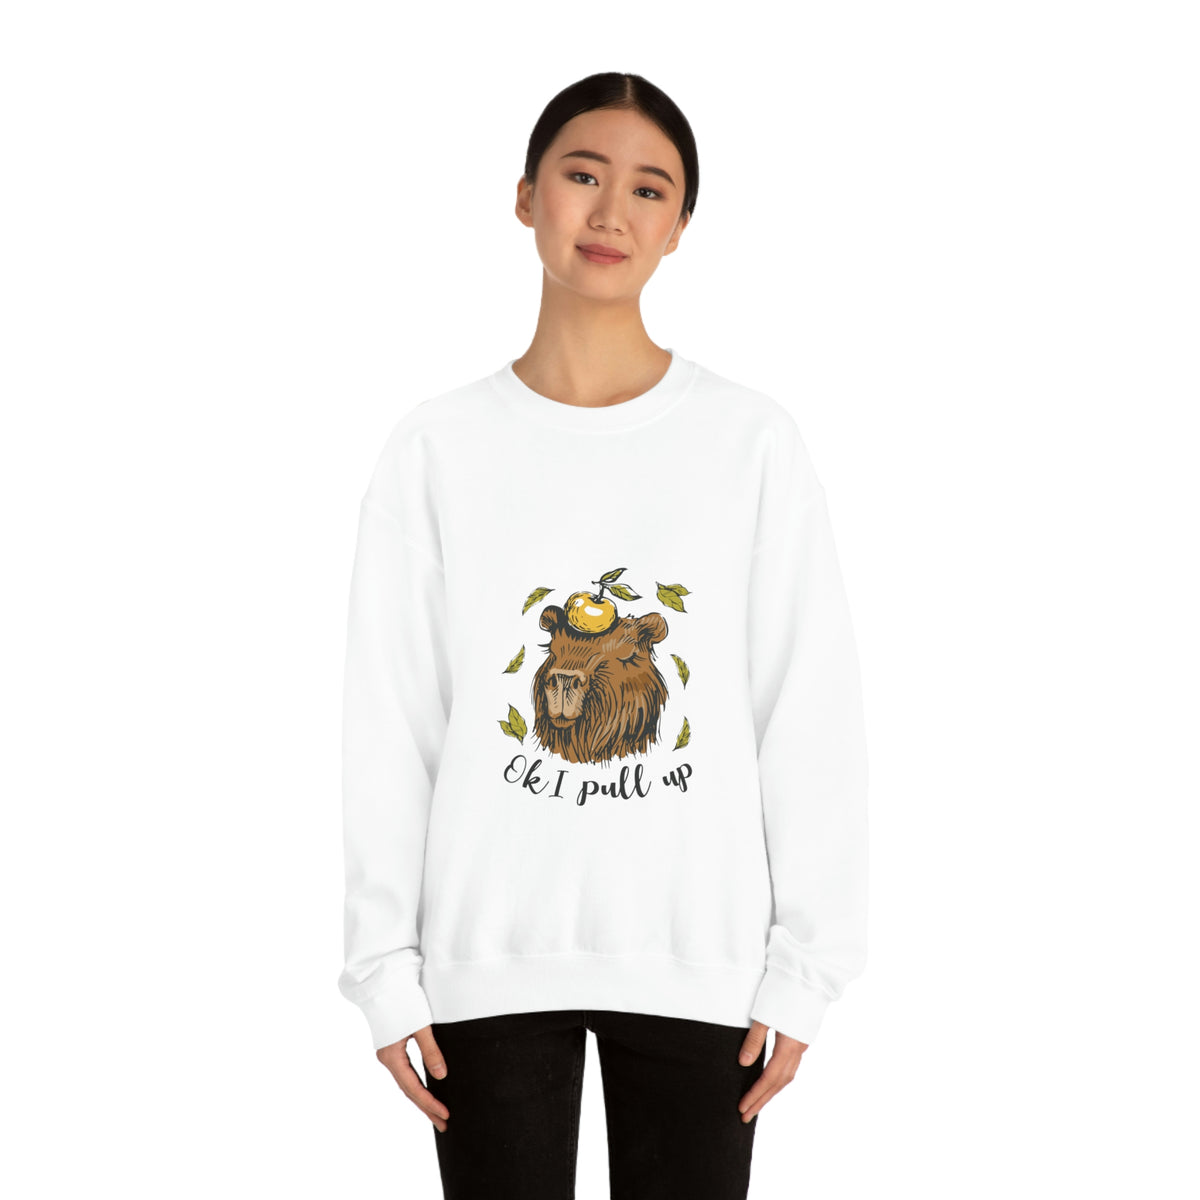 Capybara and Orange - Unisex Sweatshirt